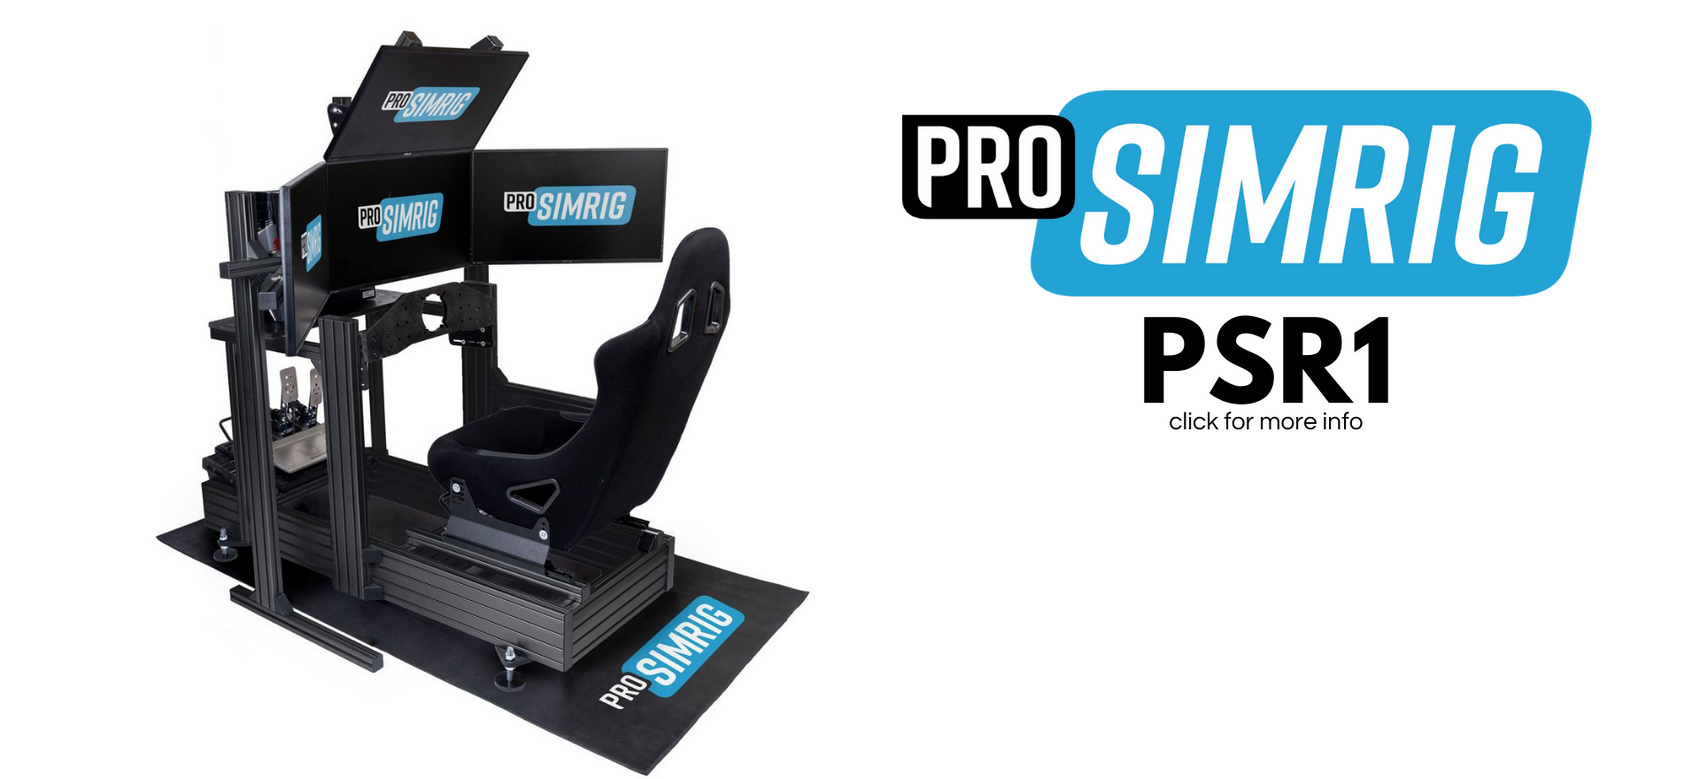 PRO SIMRIG – The ultimate high quality sim racing cockpit – Pro Sim Rig